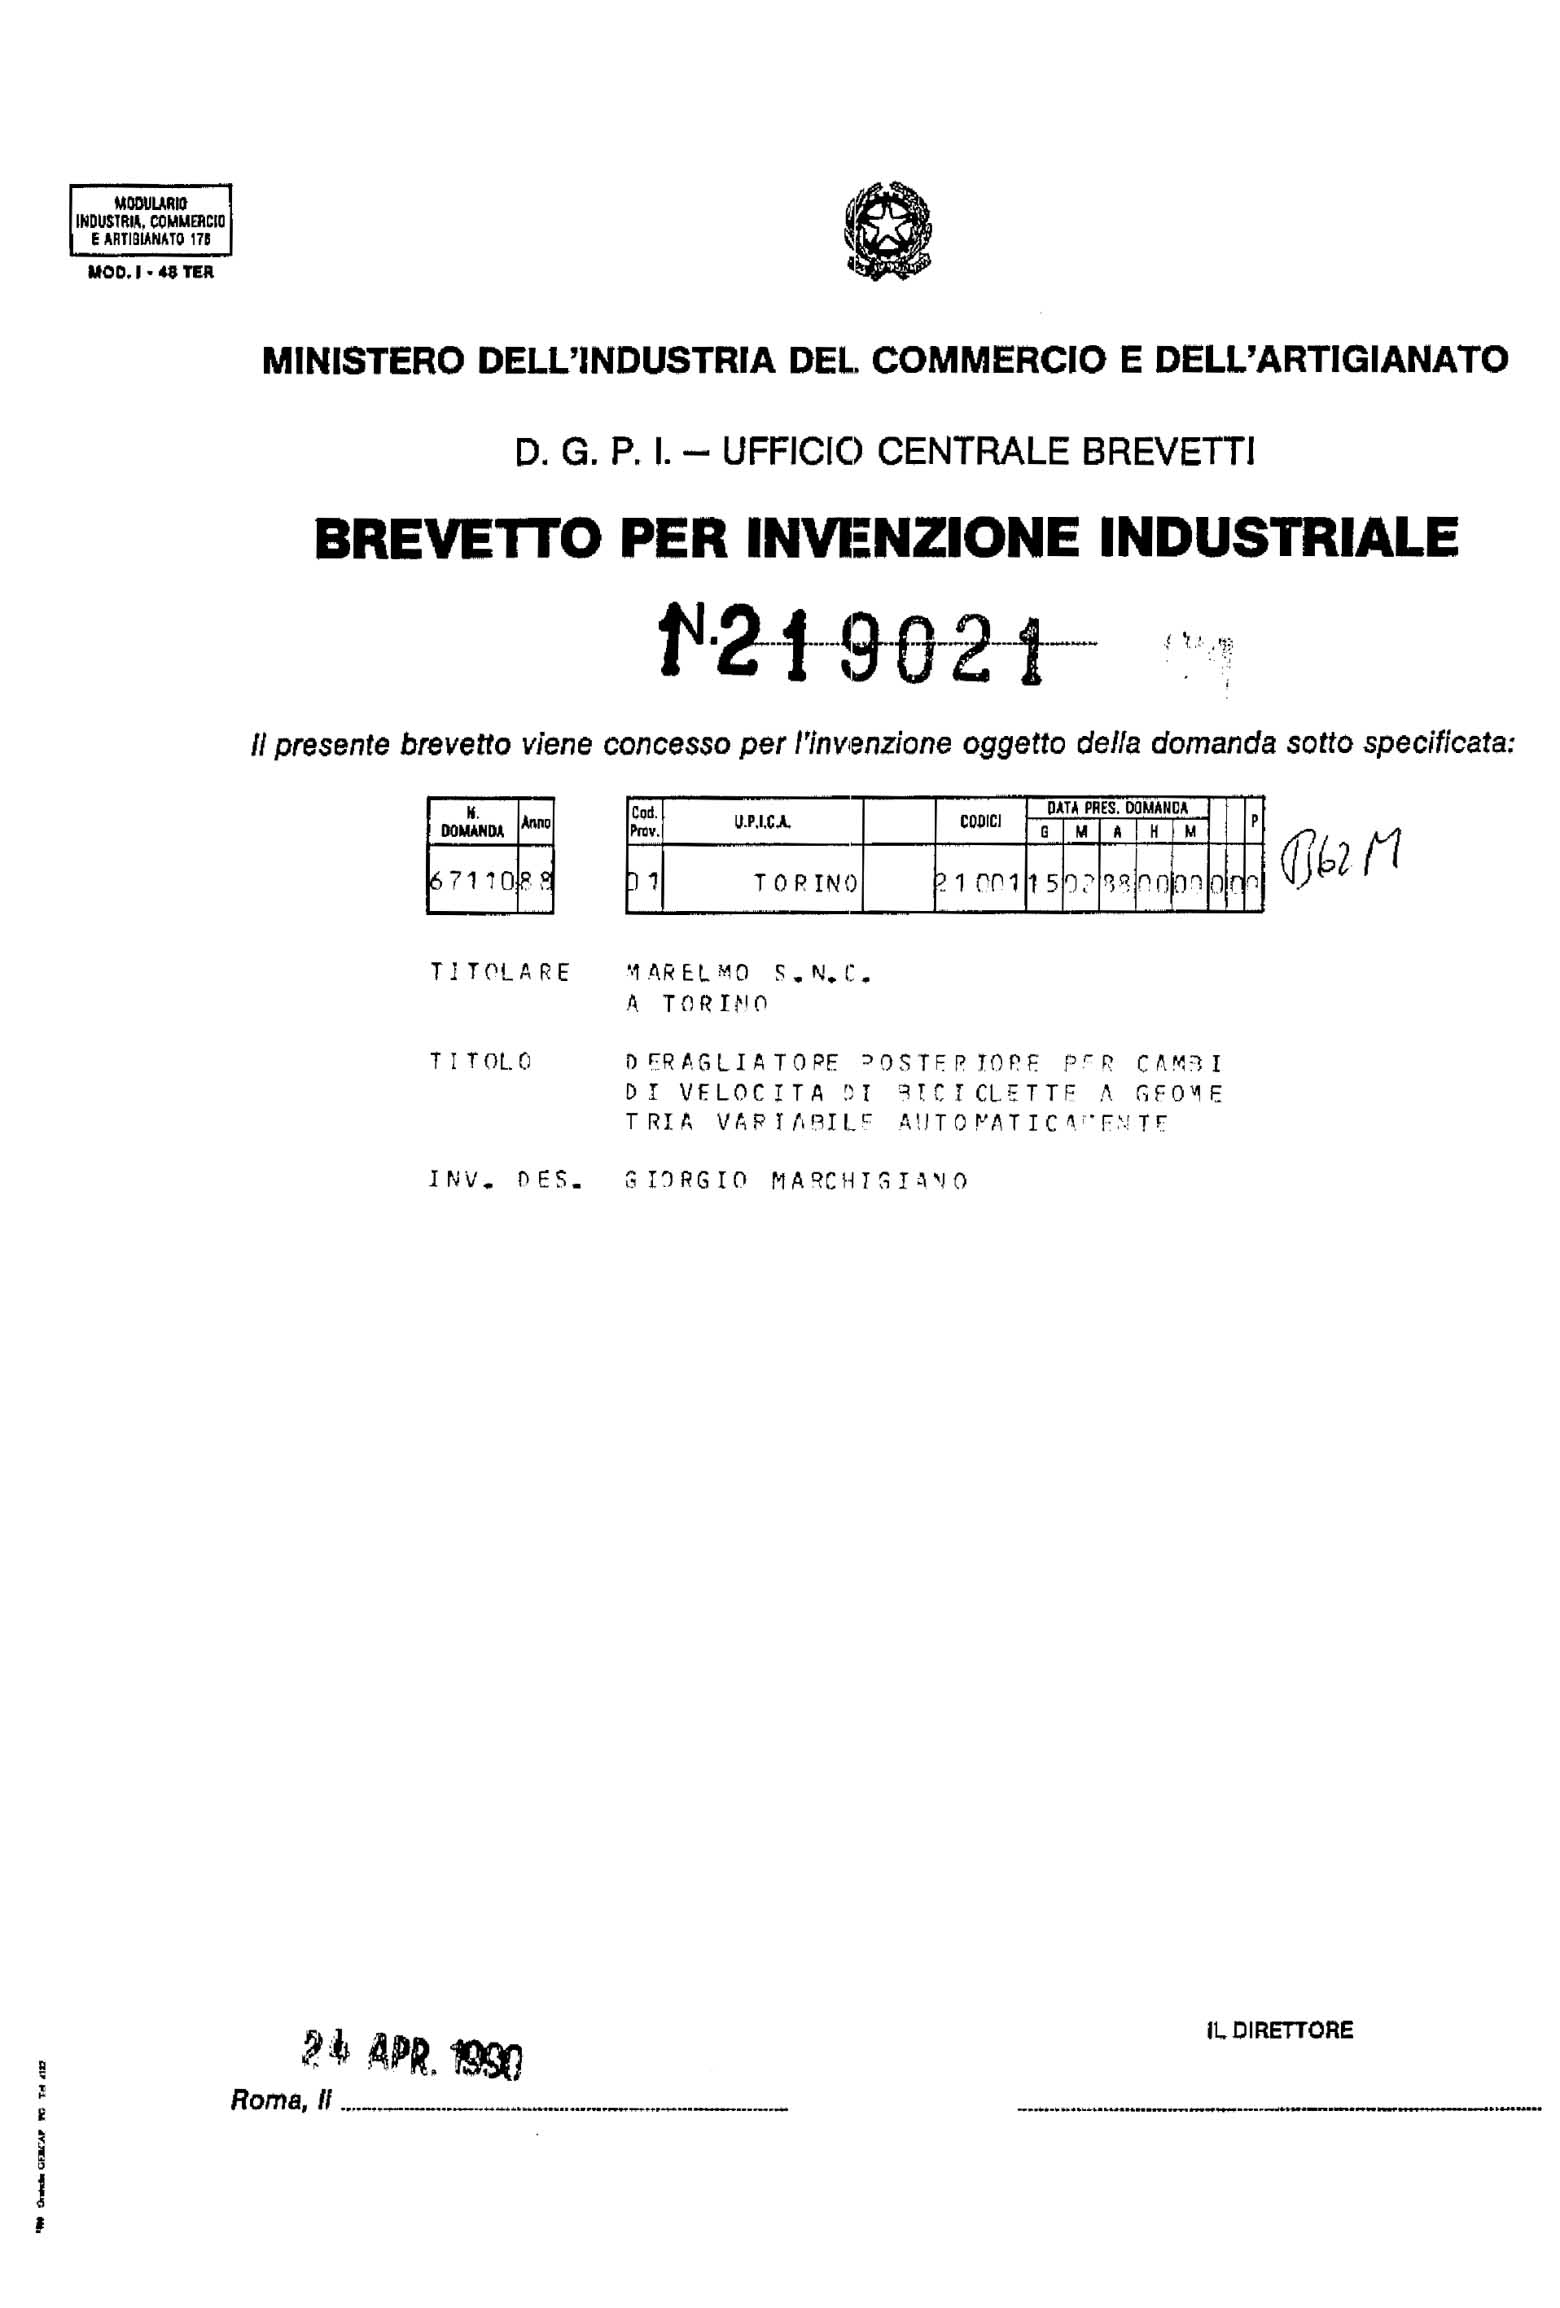 Italian Patent 1,219,021 - Marelmo scan 001 main image